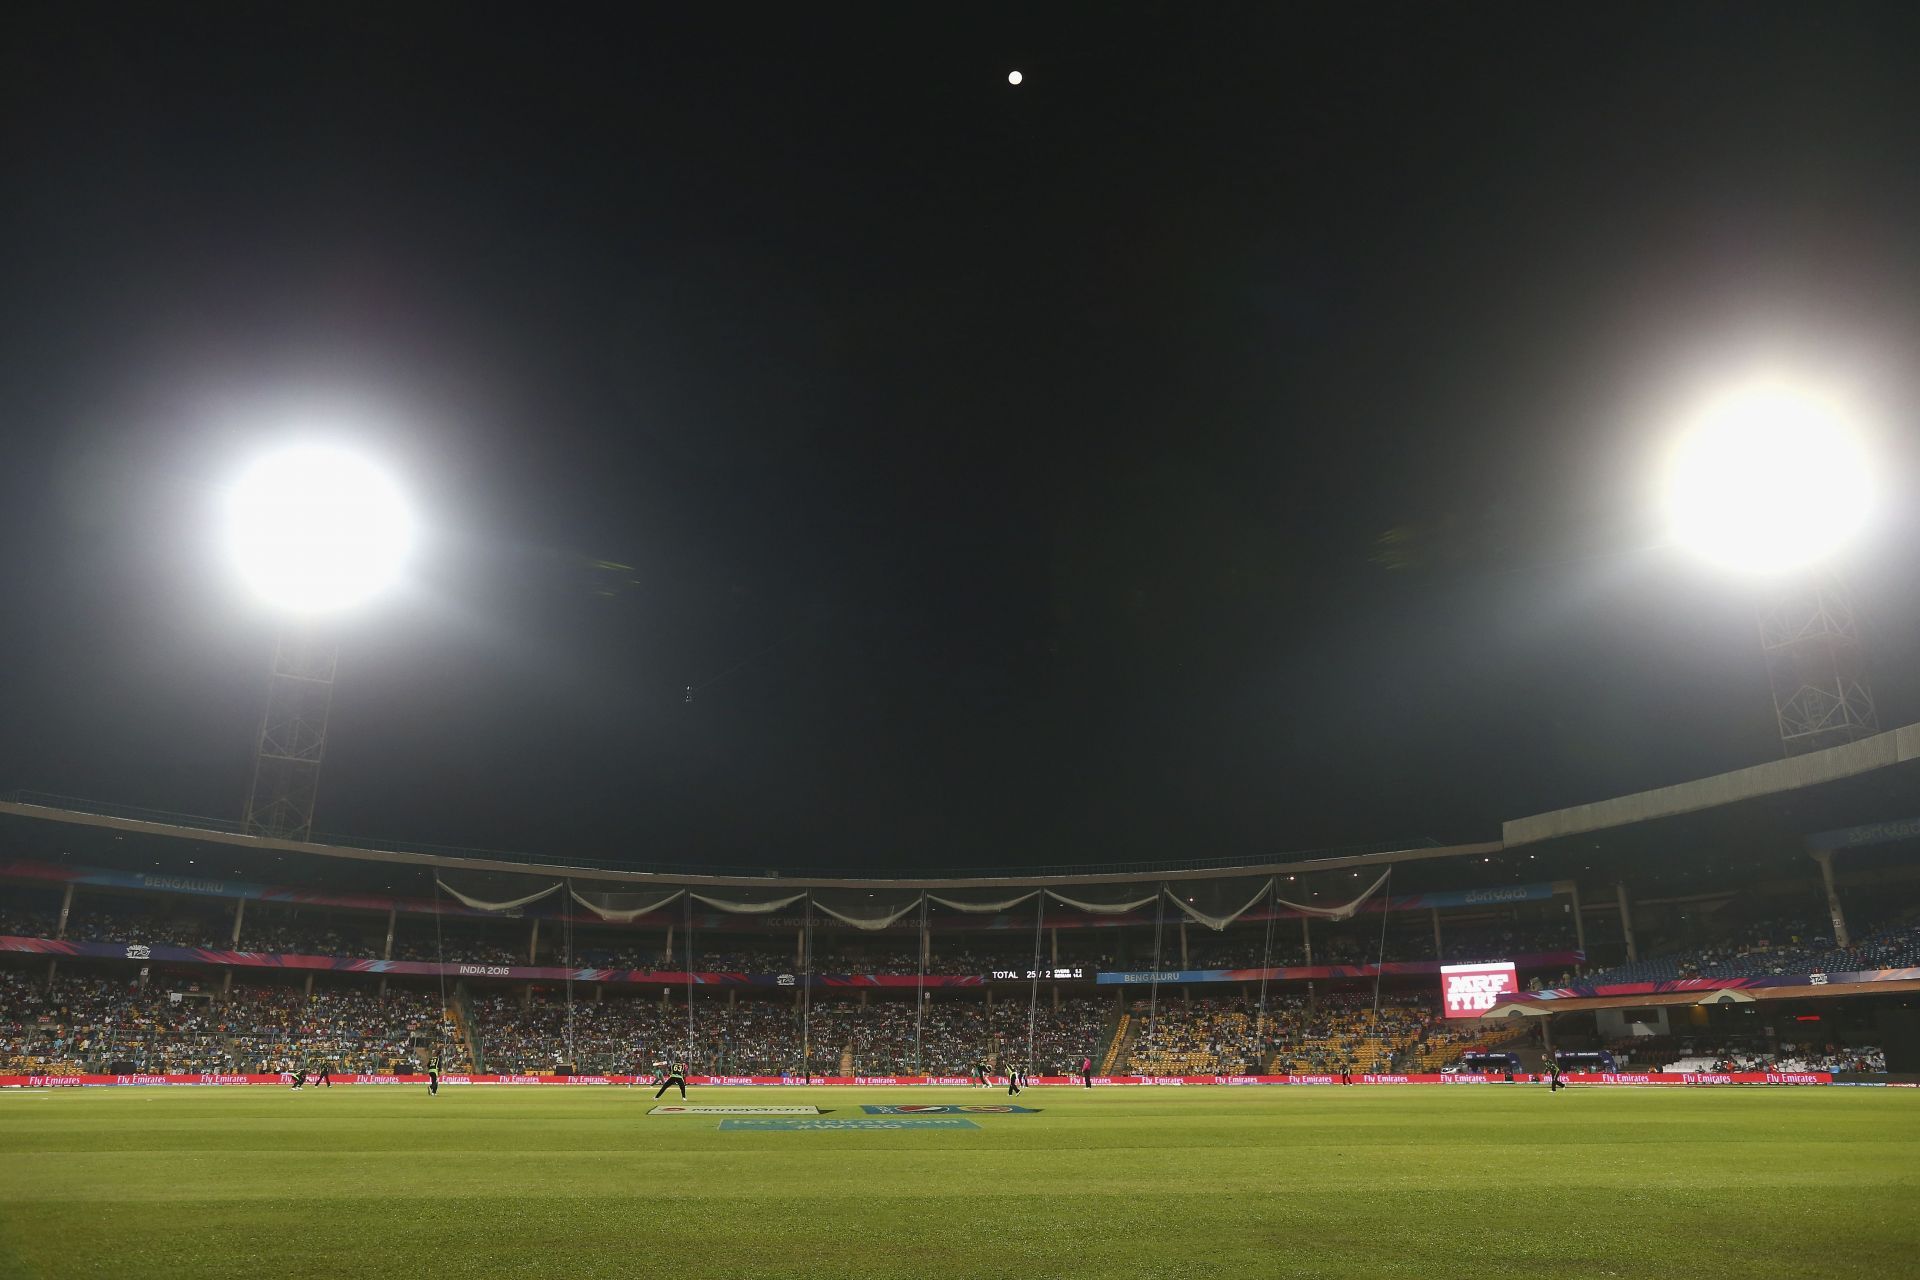 M. Chinnaswamy Stadium will host the day/night Test between India and Sri Lanka